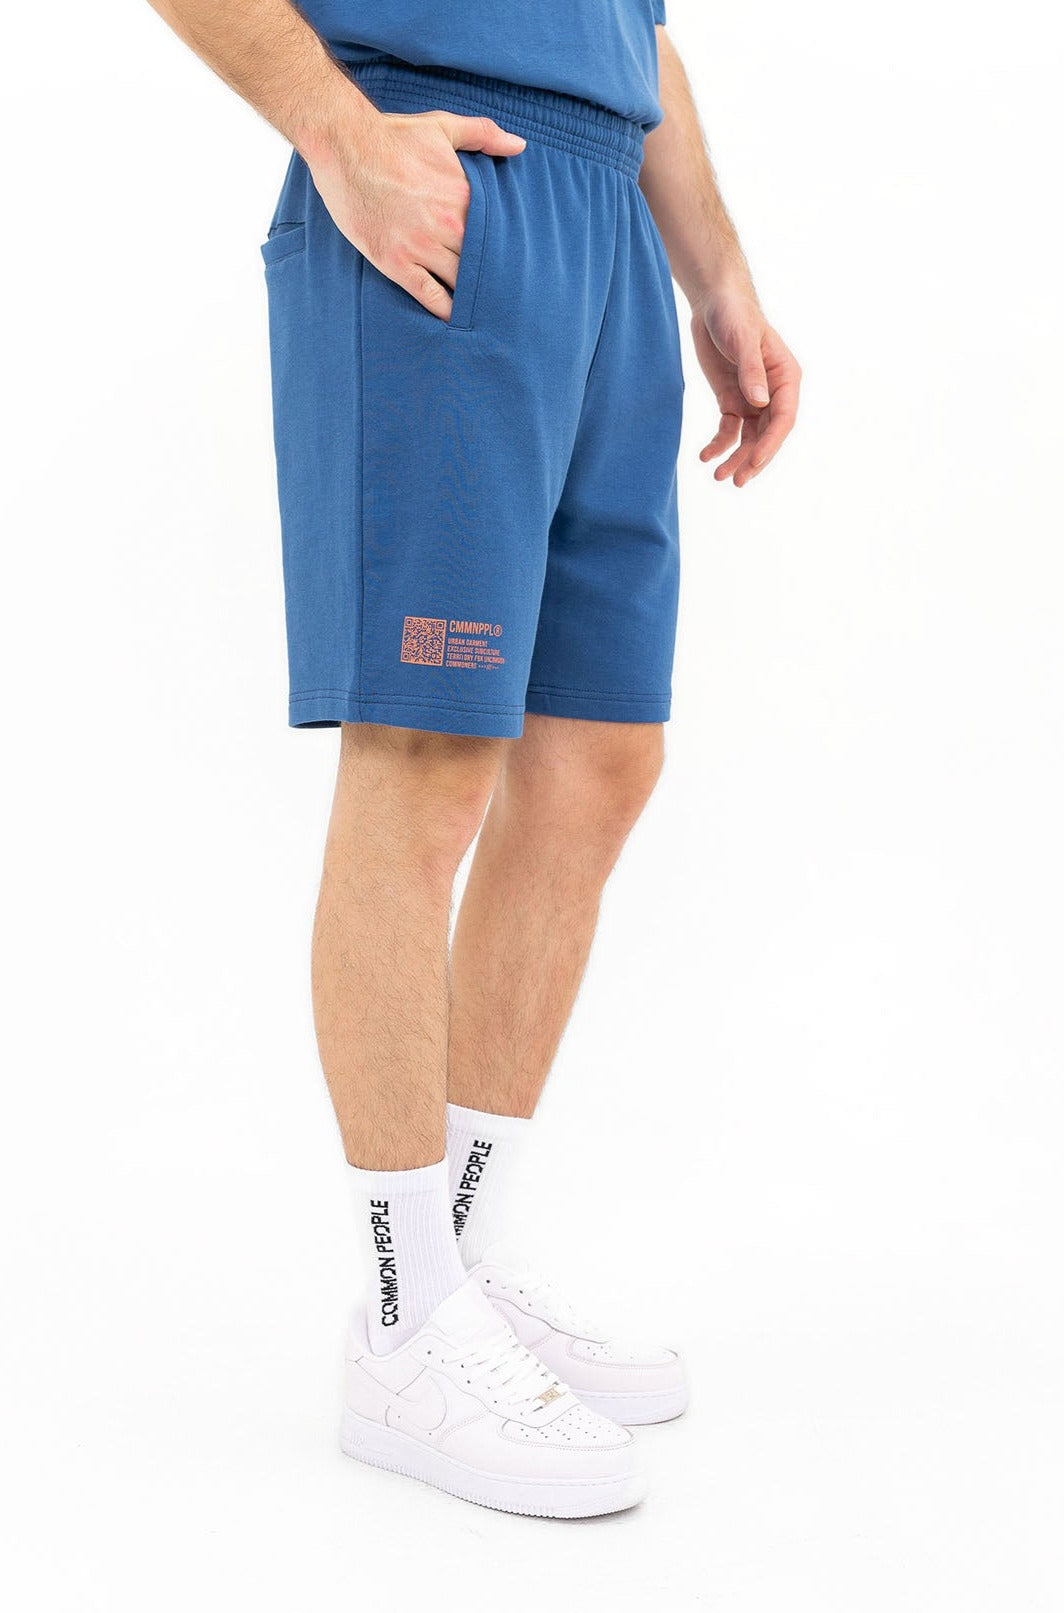 Shorts - Marine Blue